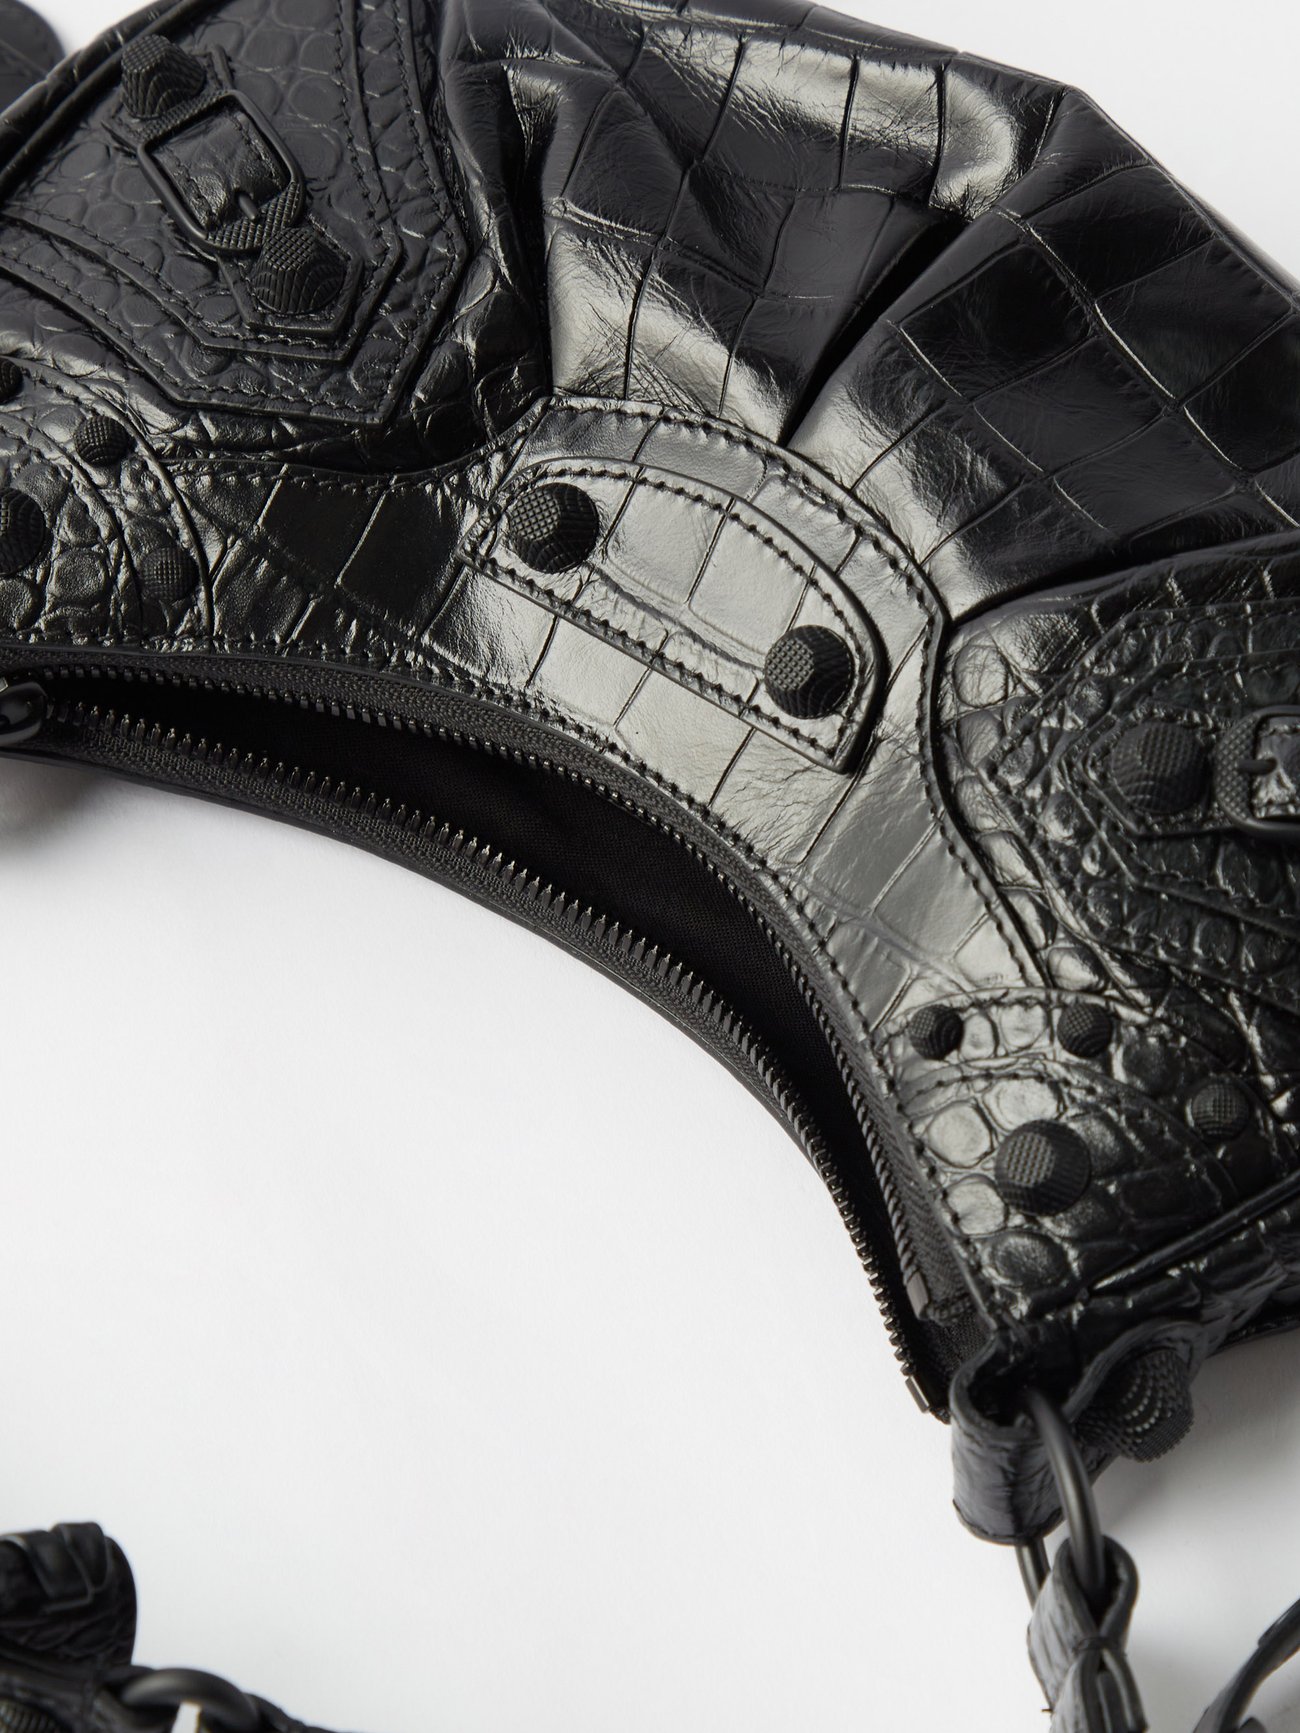 BALENCIAGA Treize XS metallic croc-effect leather shoulder bag